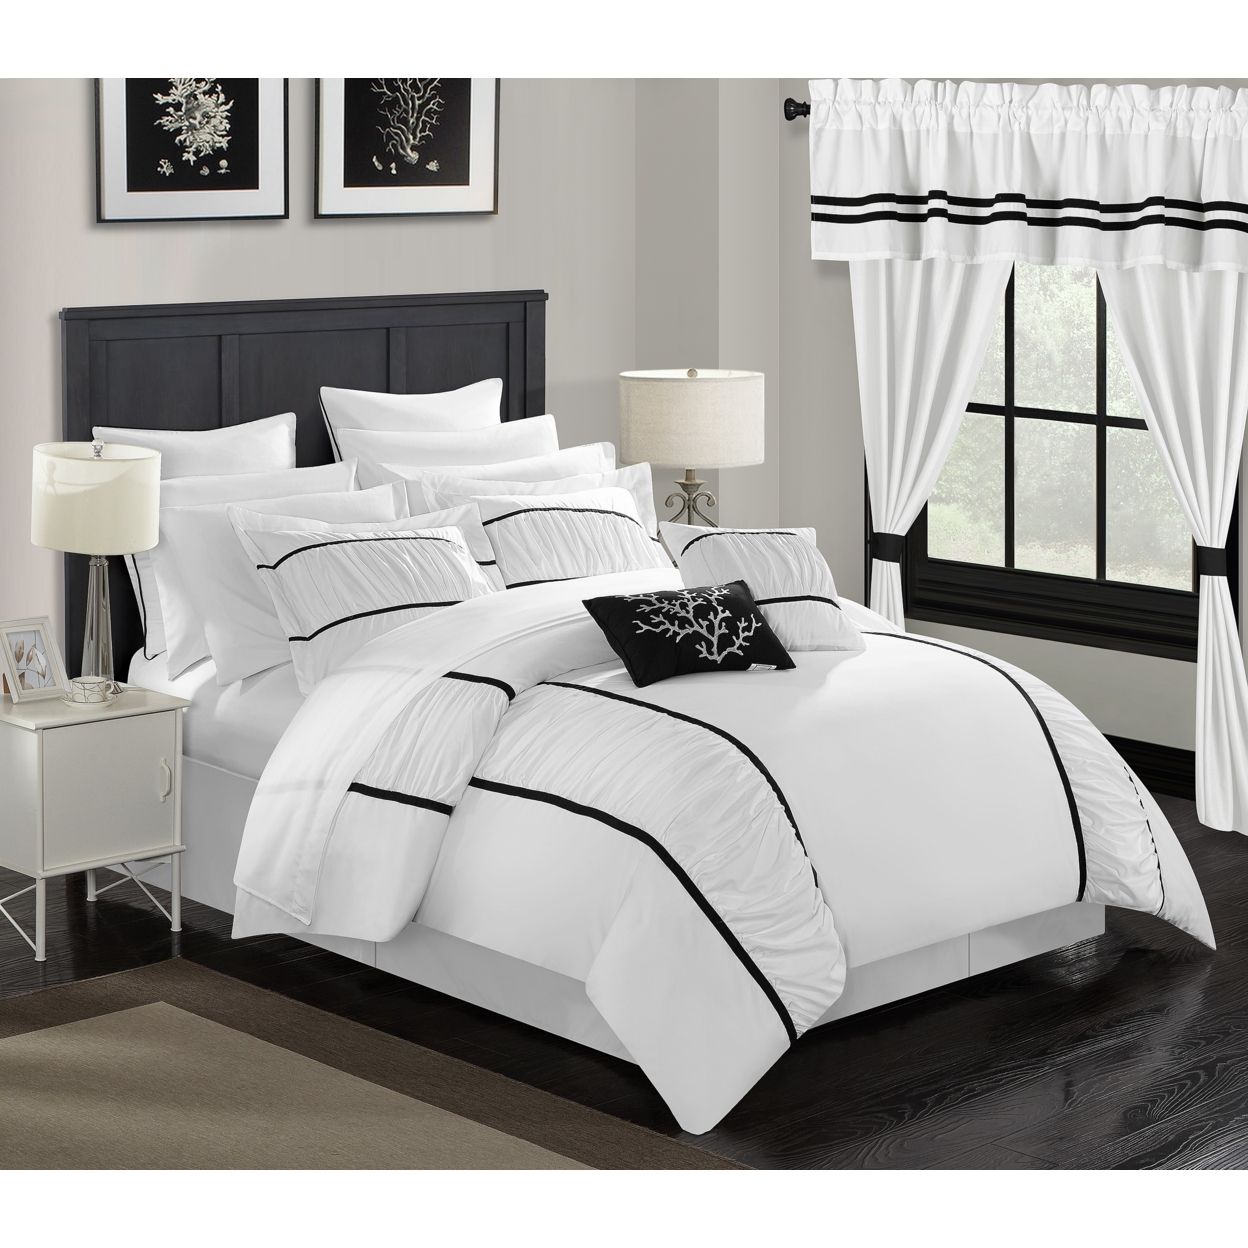 24 Piece Marian Complete Bedroom In A Bag Pinch Pleat Ruffled Designer Embellished Bed In A Bag Comforter Set - Navy, Queen